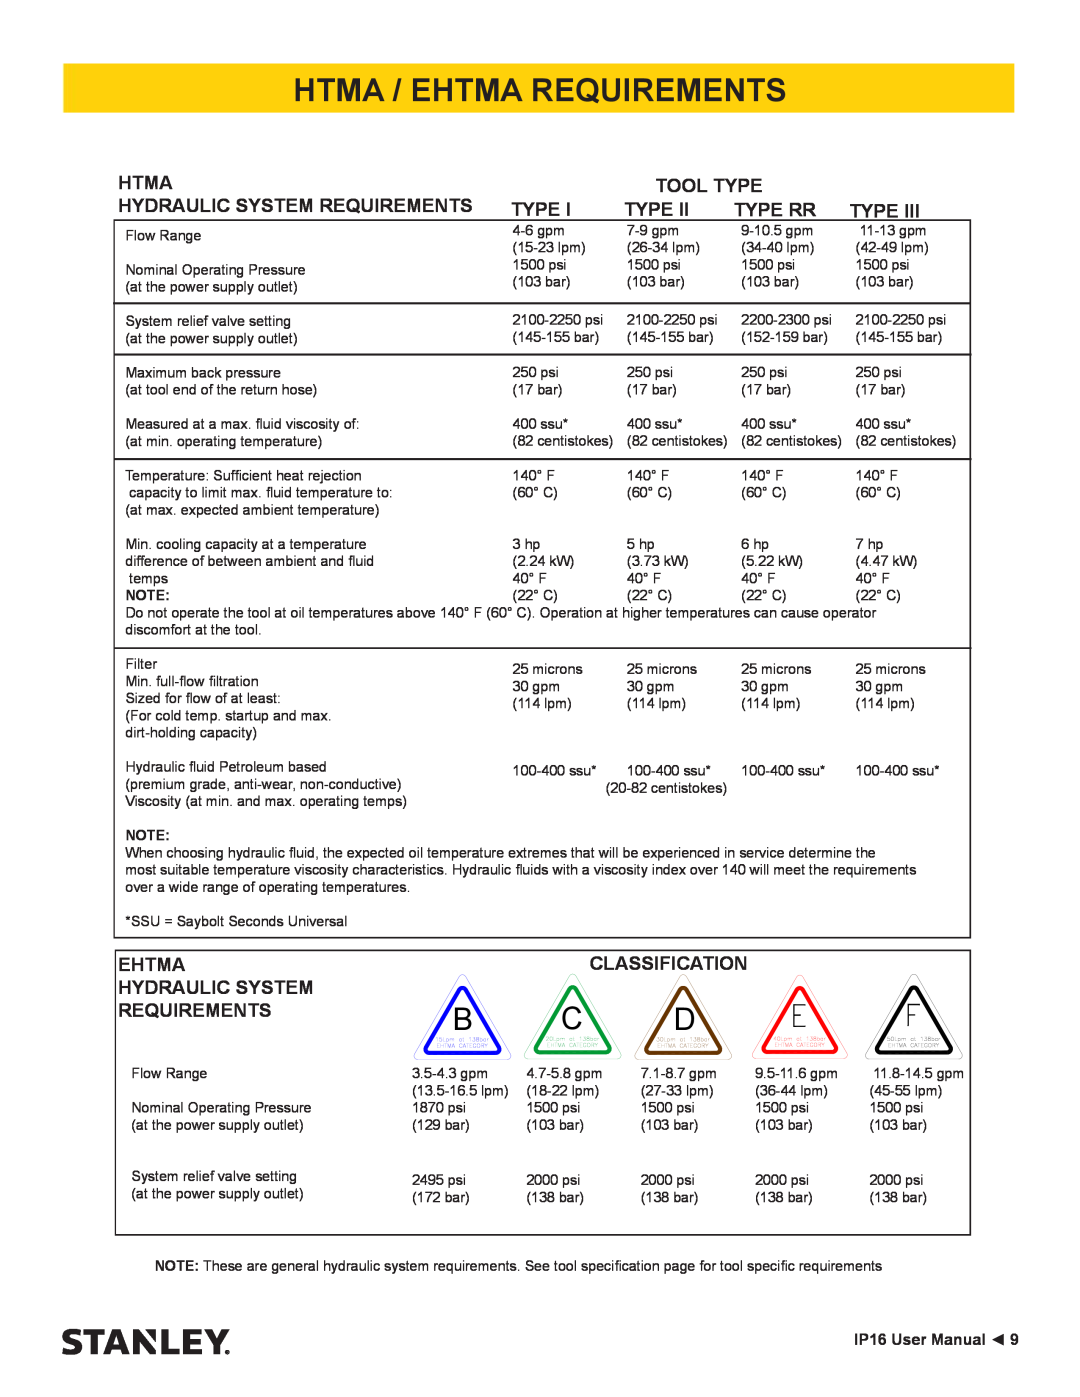 Stanley Black & Decker IP16 user manual Htma / Ehtma Requirements 